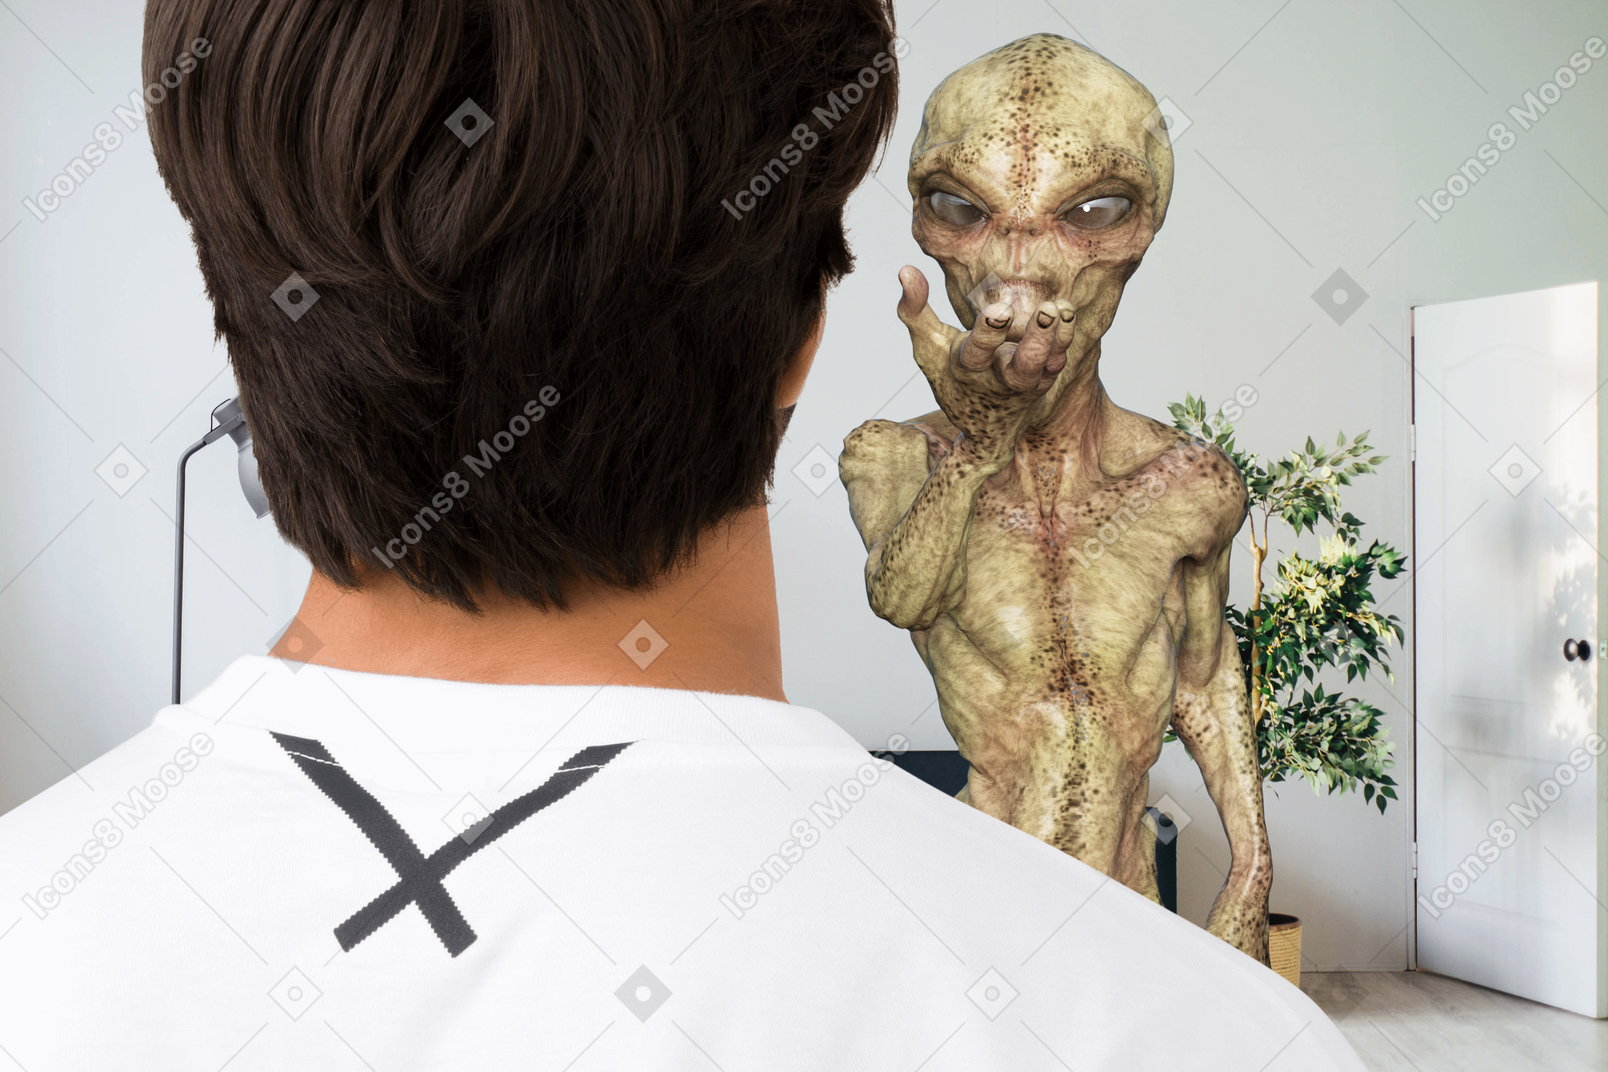 Homme rencontrant un extraterrestre